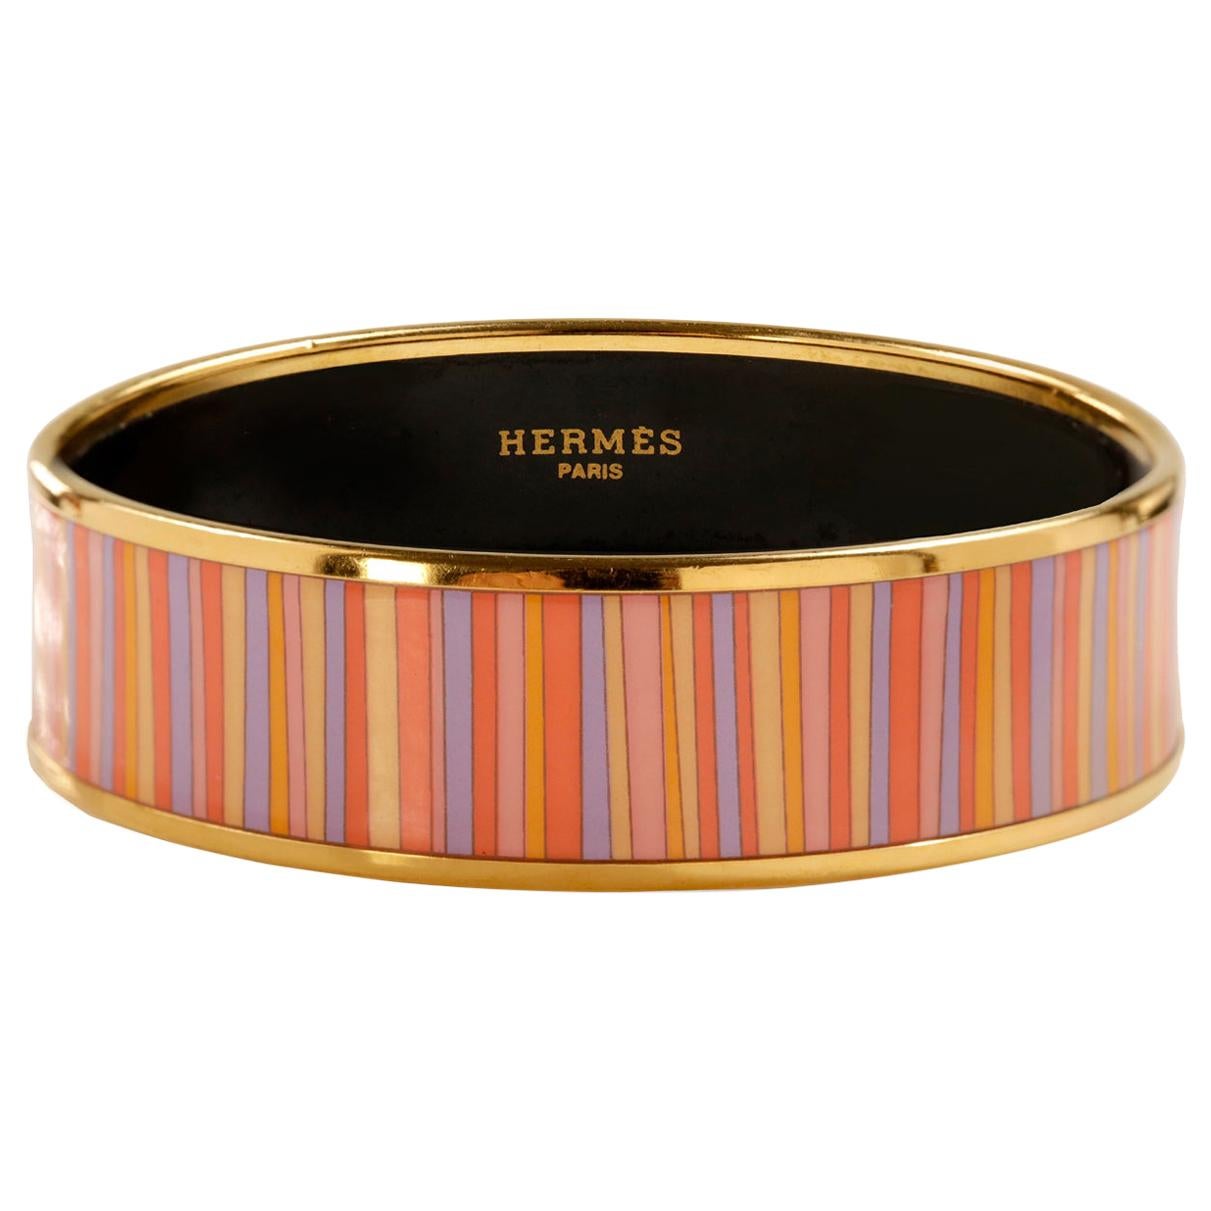 What is the most popular Hermès bracelet?